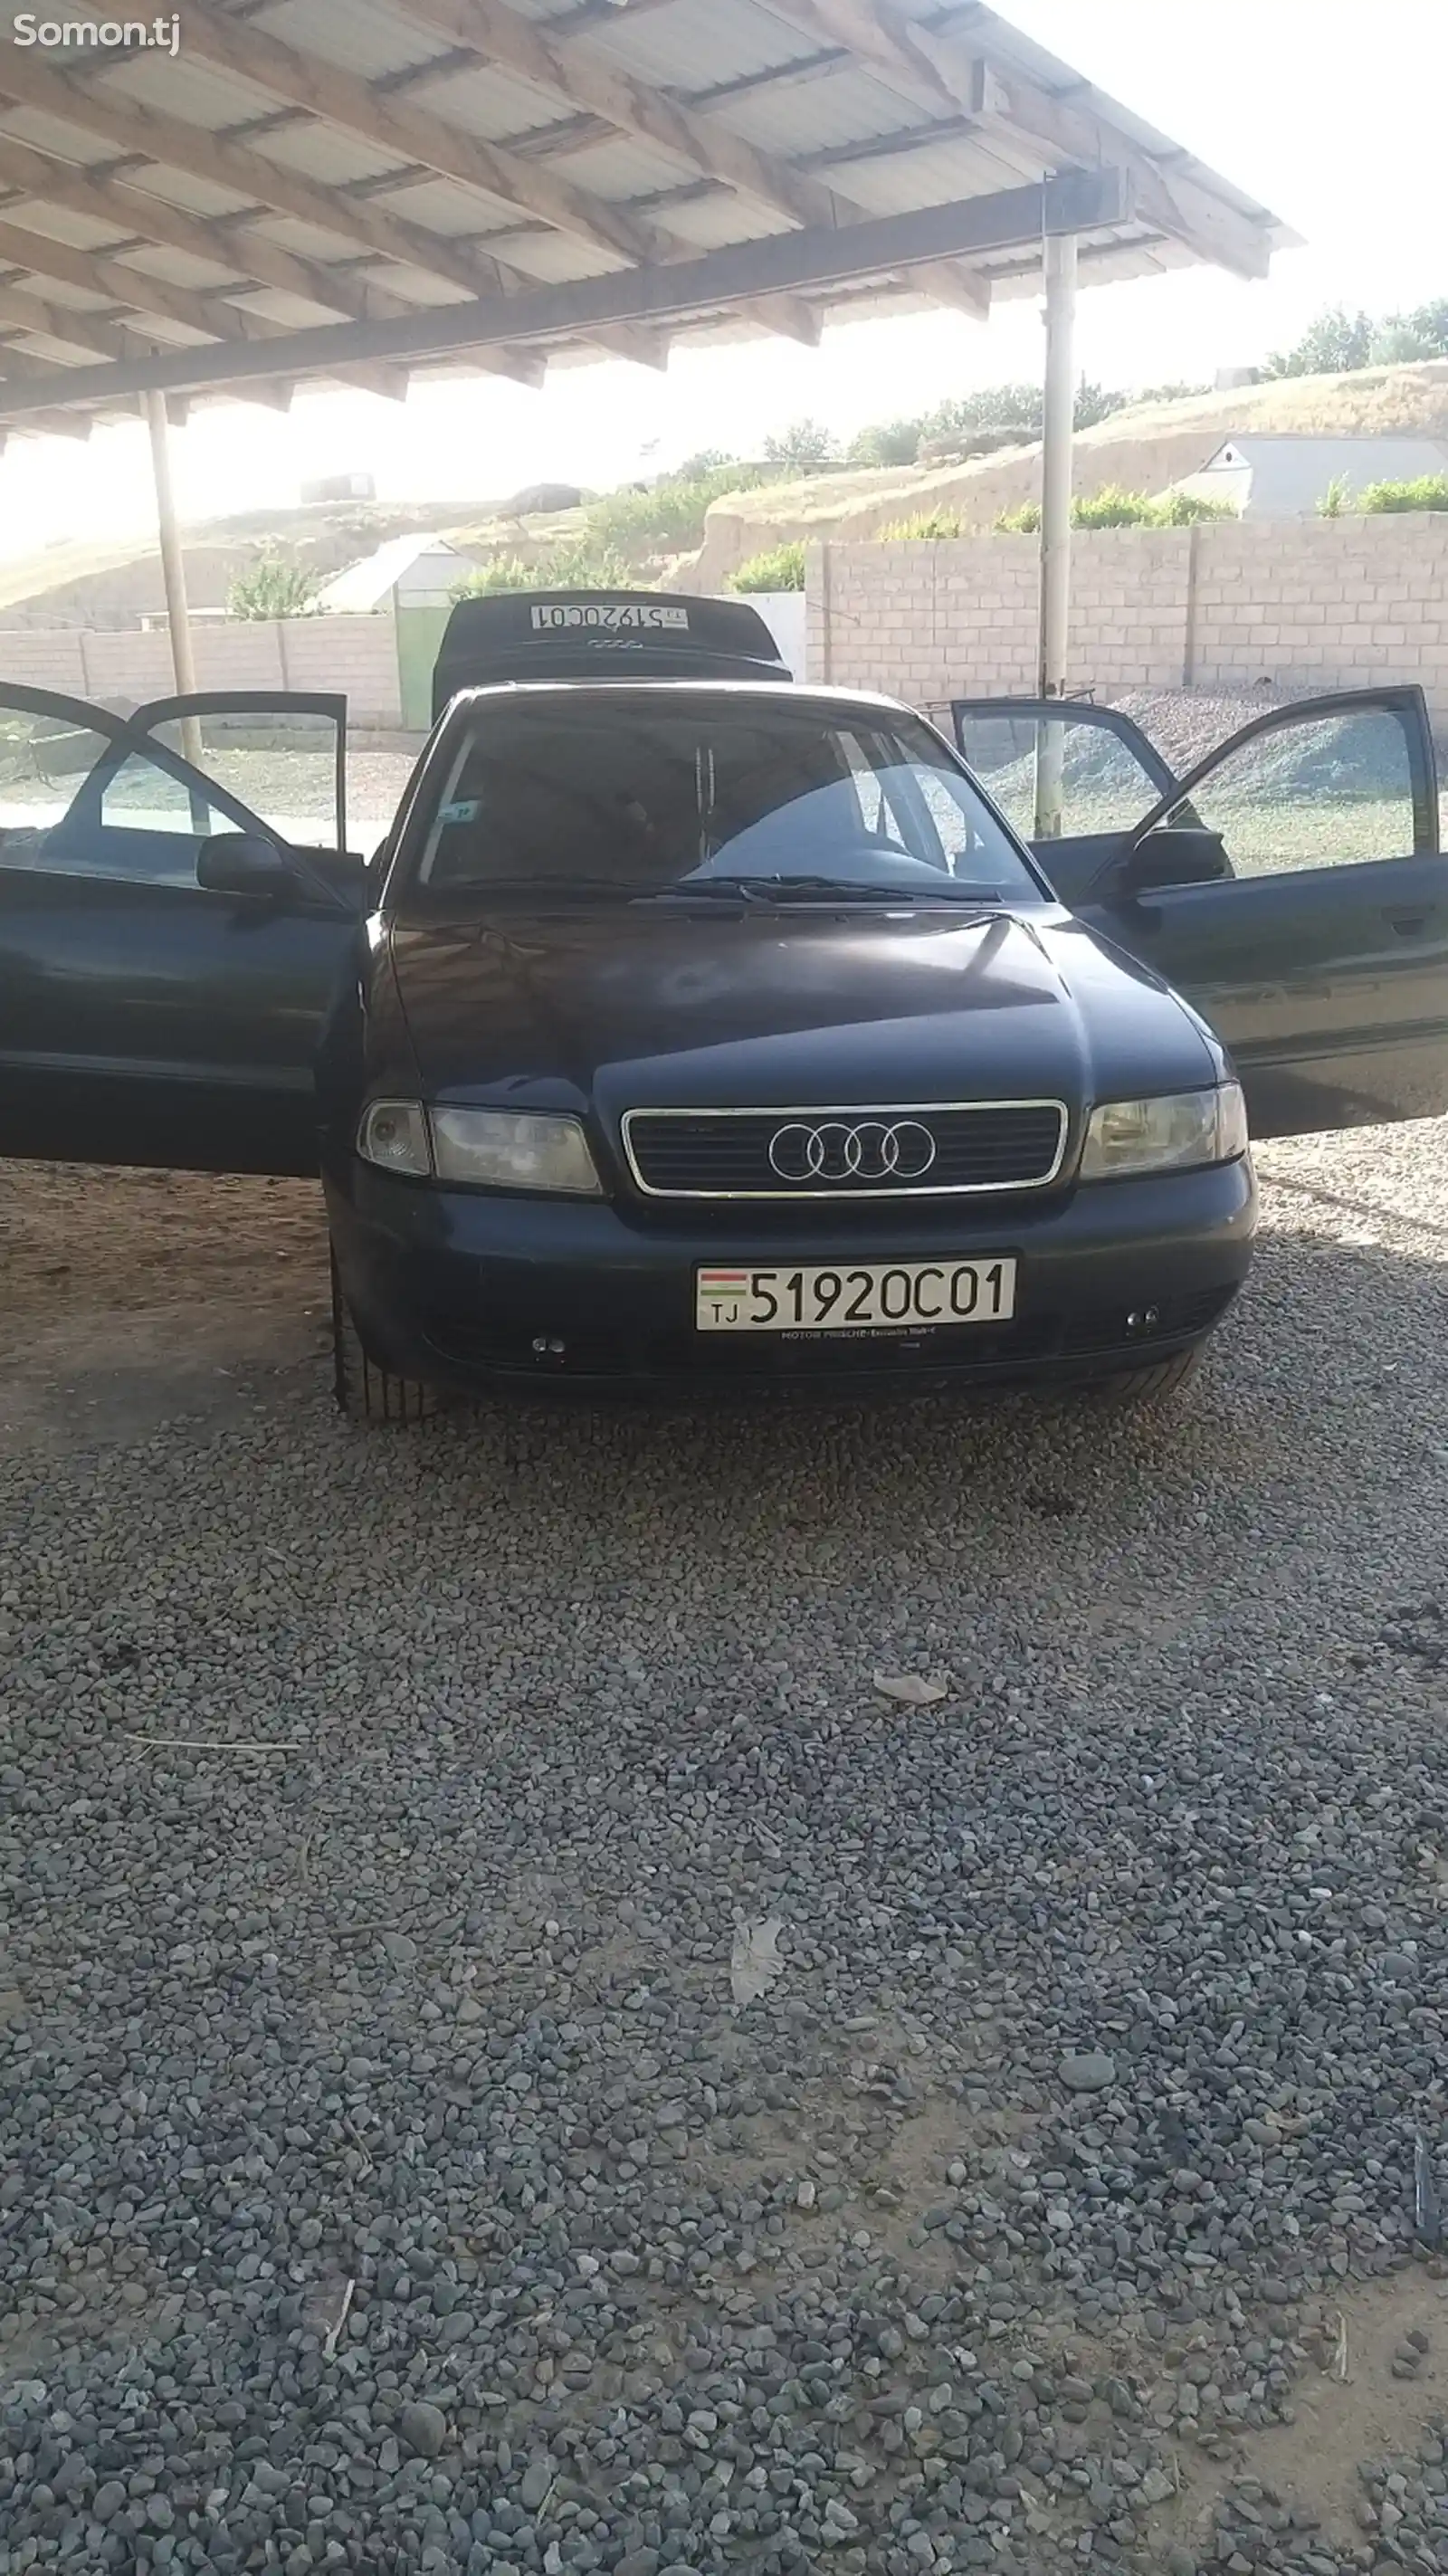 Audi A4, 1995-13